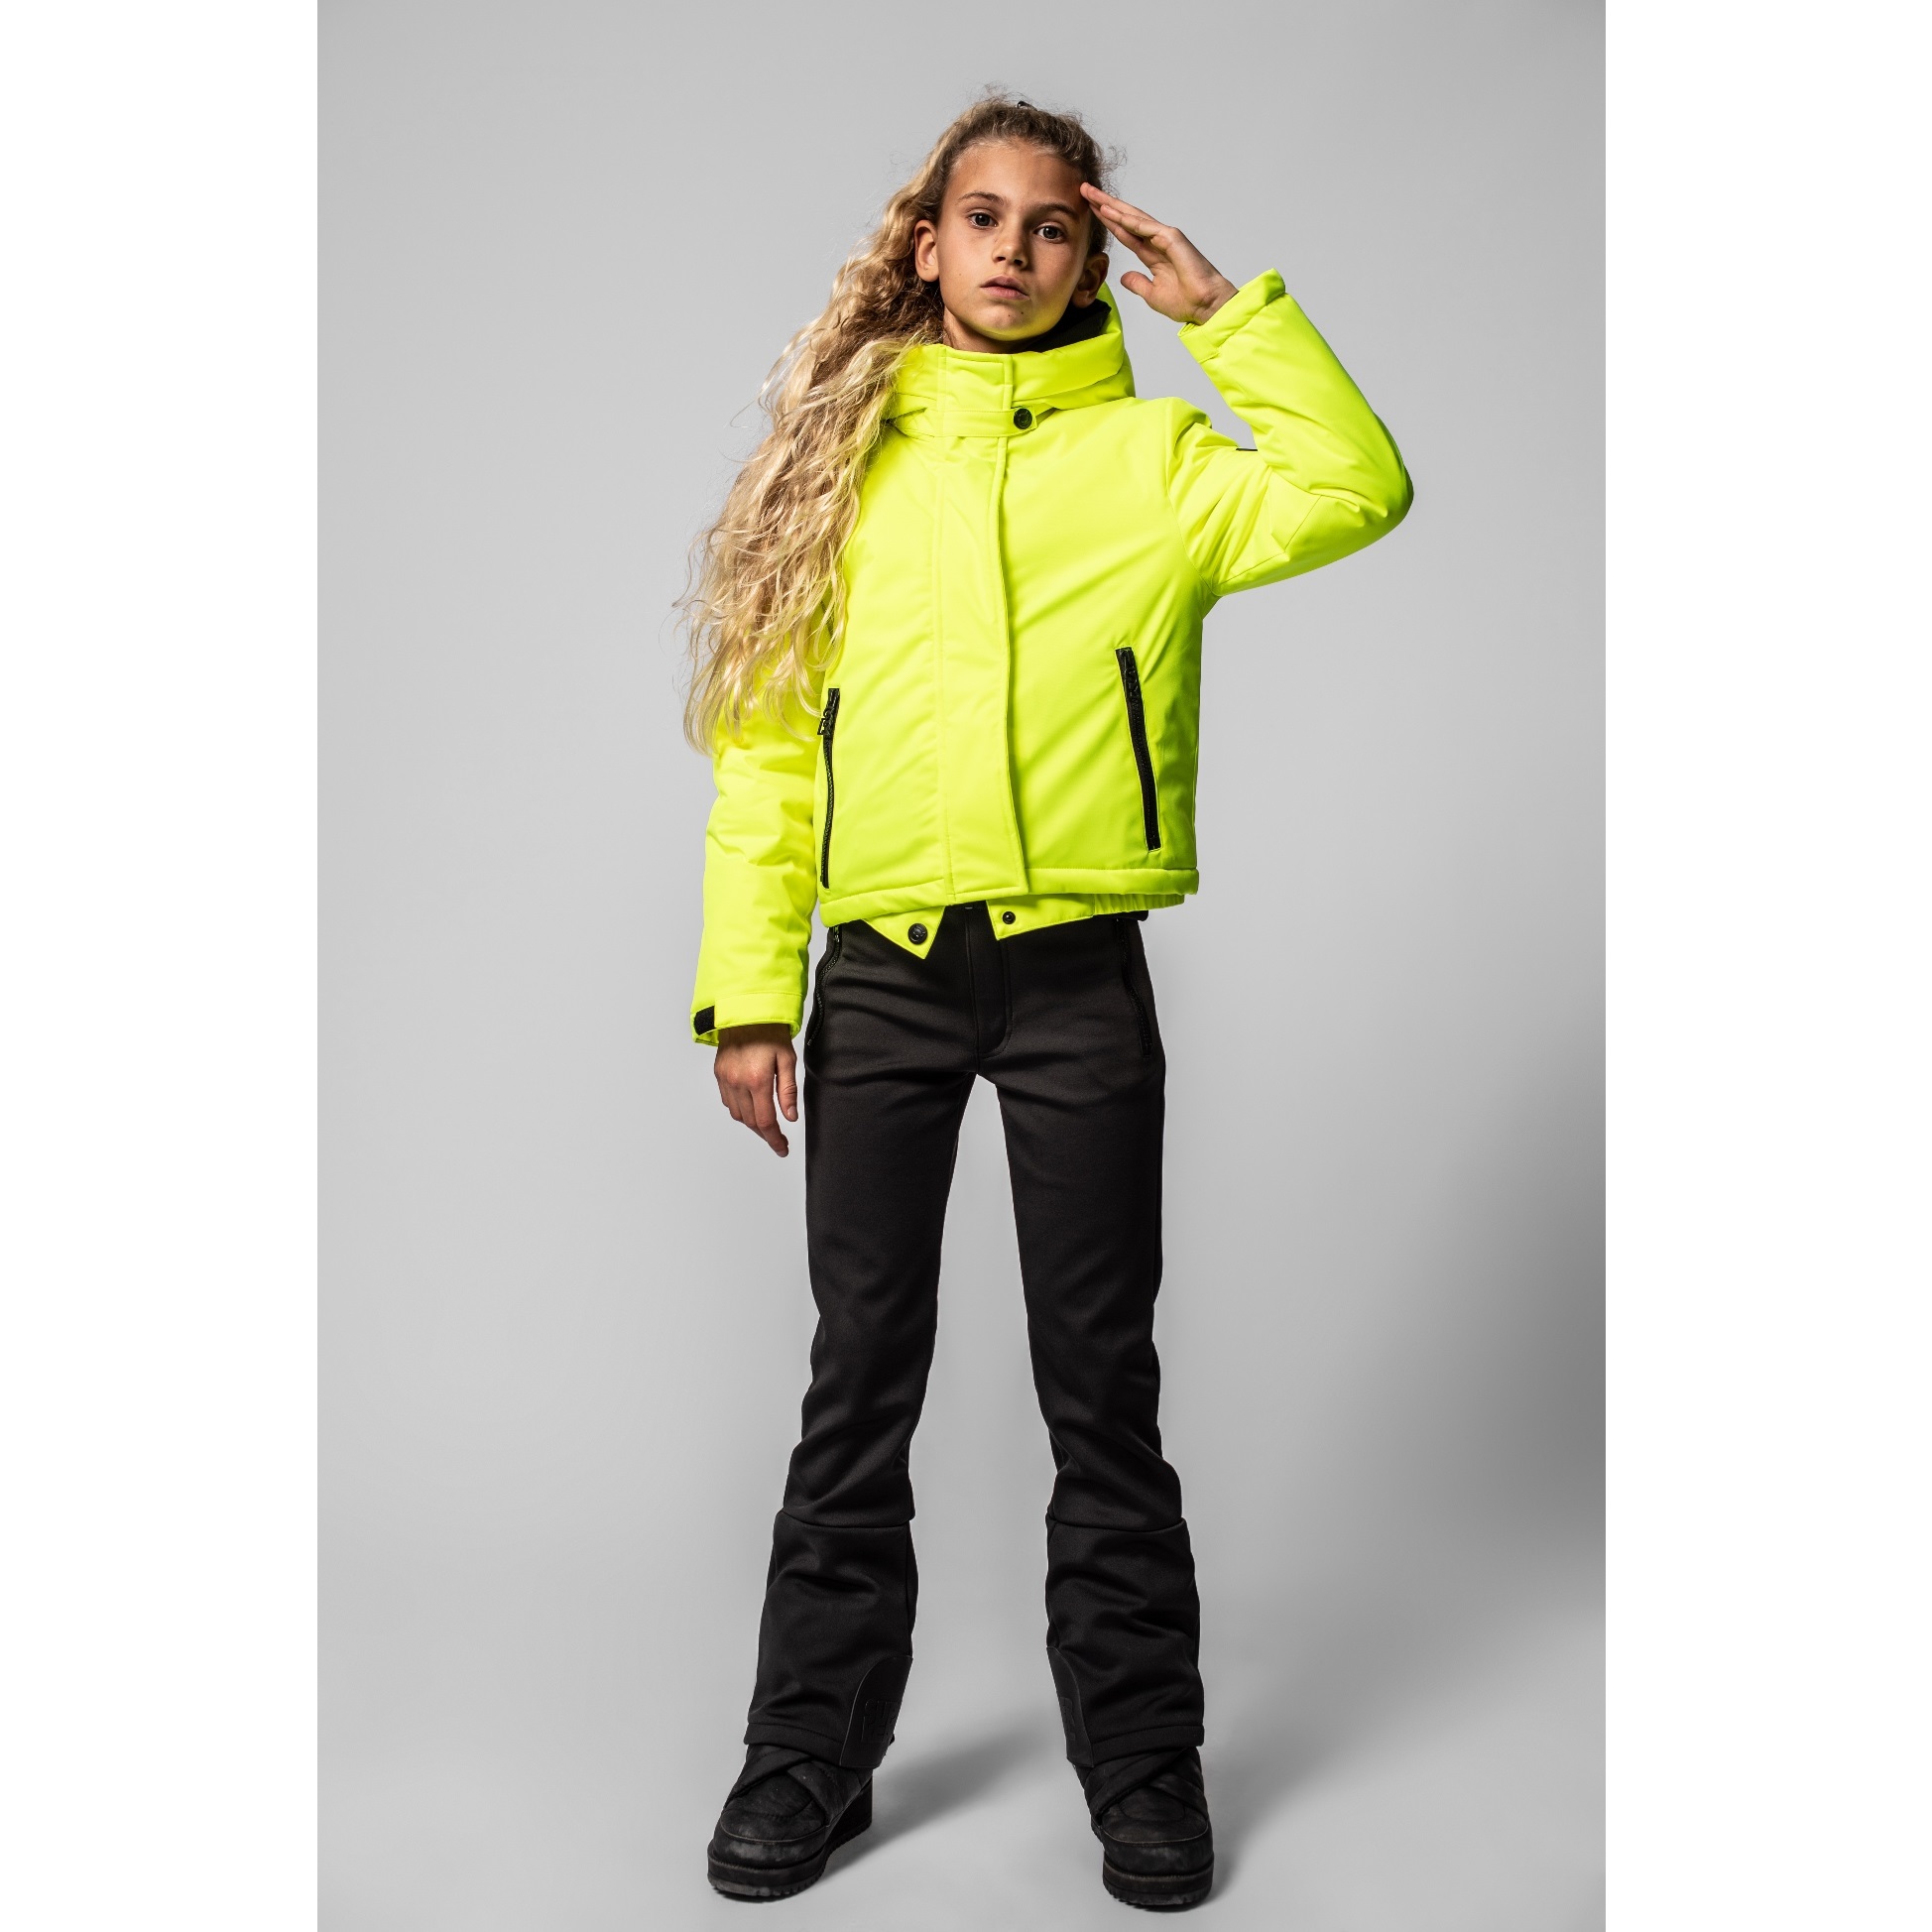  Ski & Snow Jackets -  superrebel TWISTER Ski Jacket R309-5208